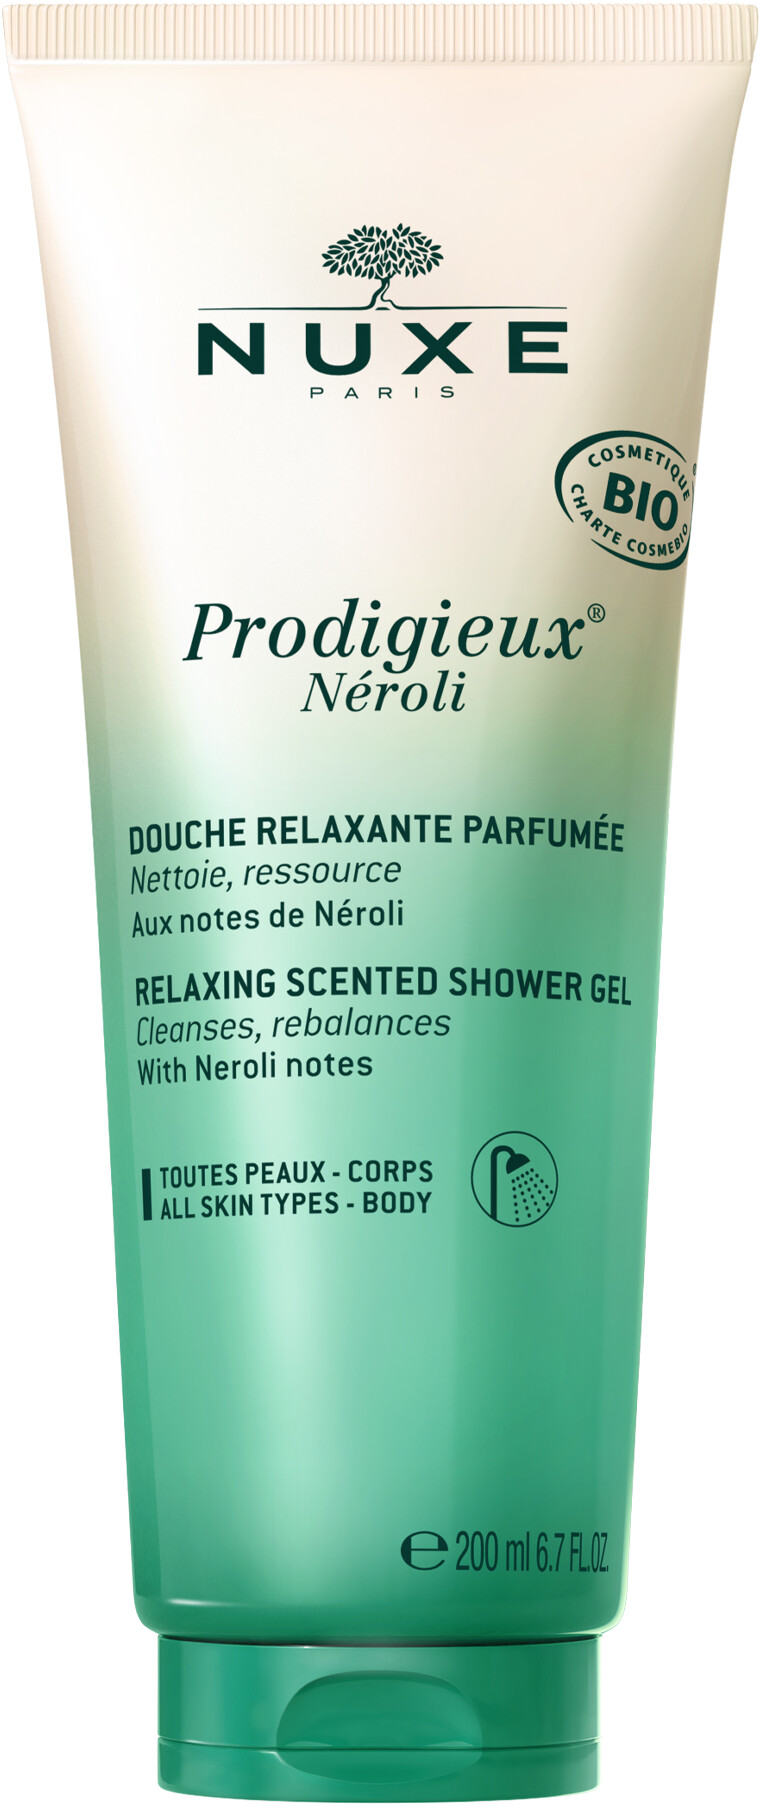 Nuxe Prodigieux Neroli Relaxing Scented Shower Gel 200ml